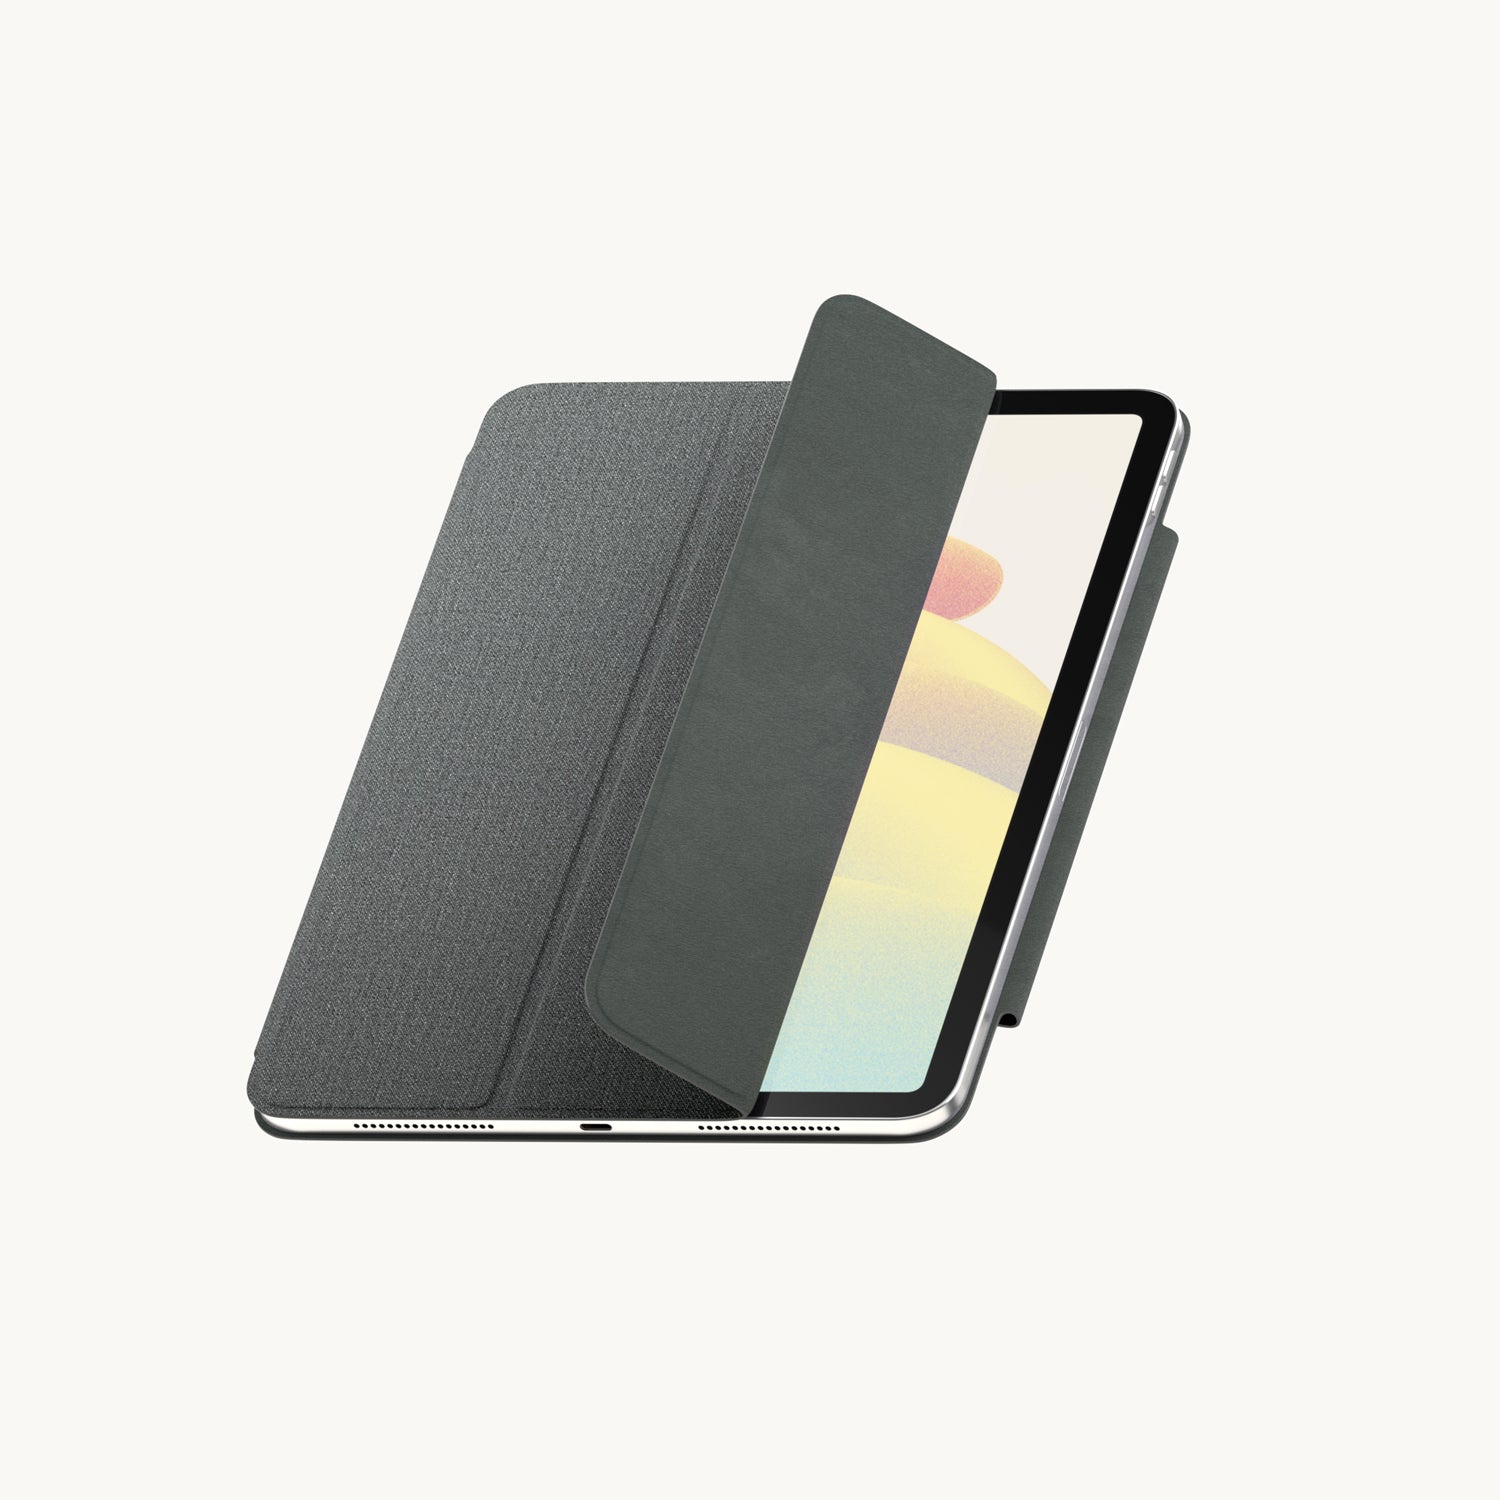 Apple iPad Mini 5 Price in Nepal  iPad Mini 2019 specs, features & price